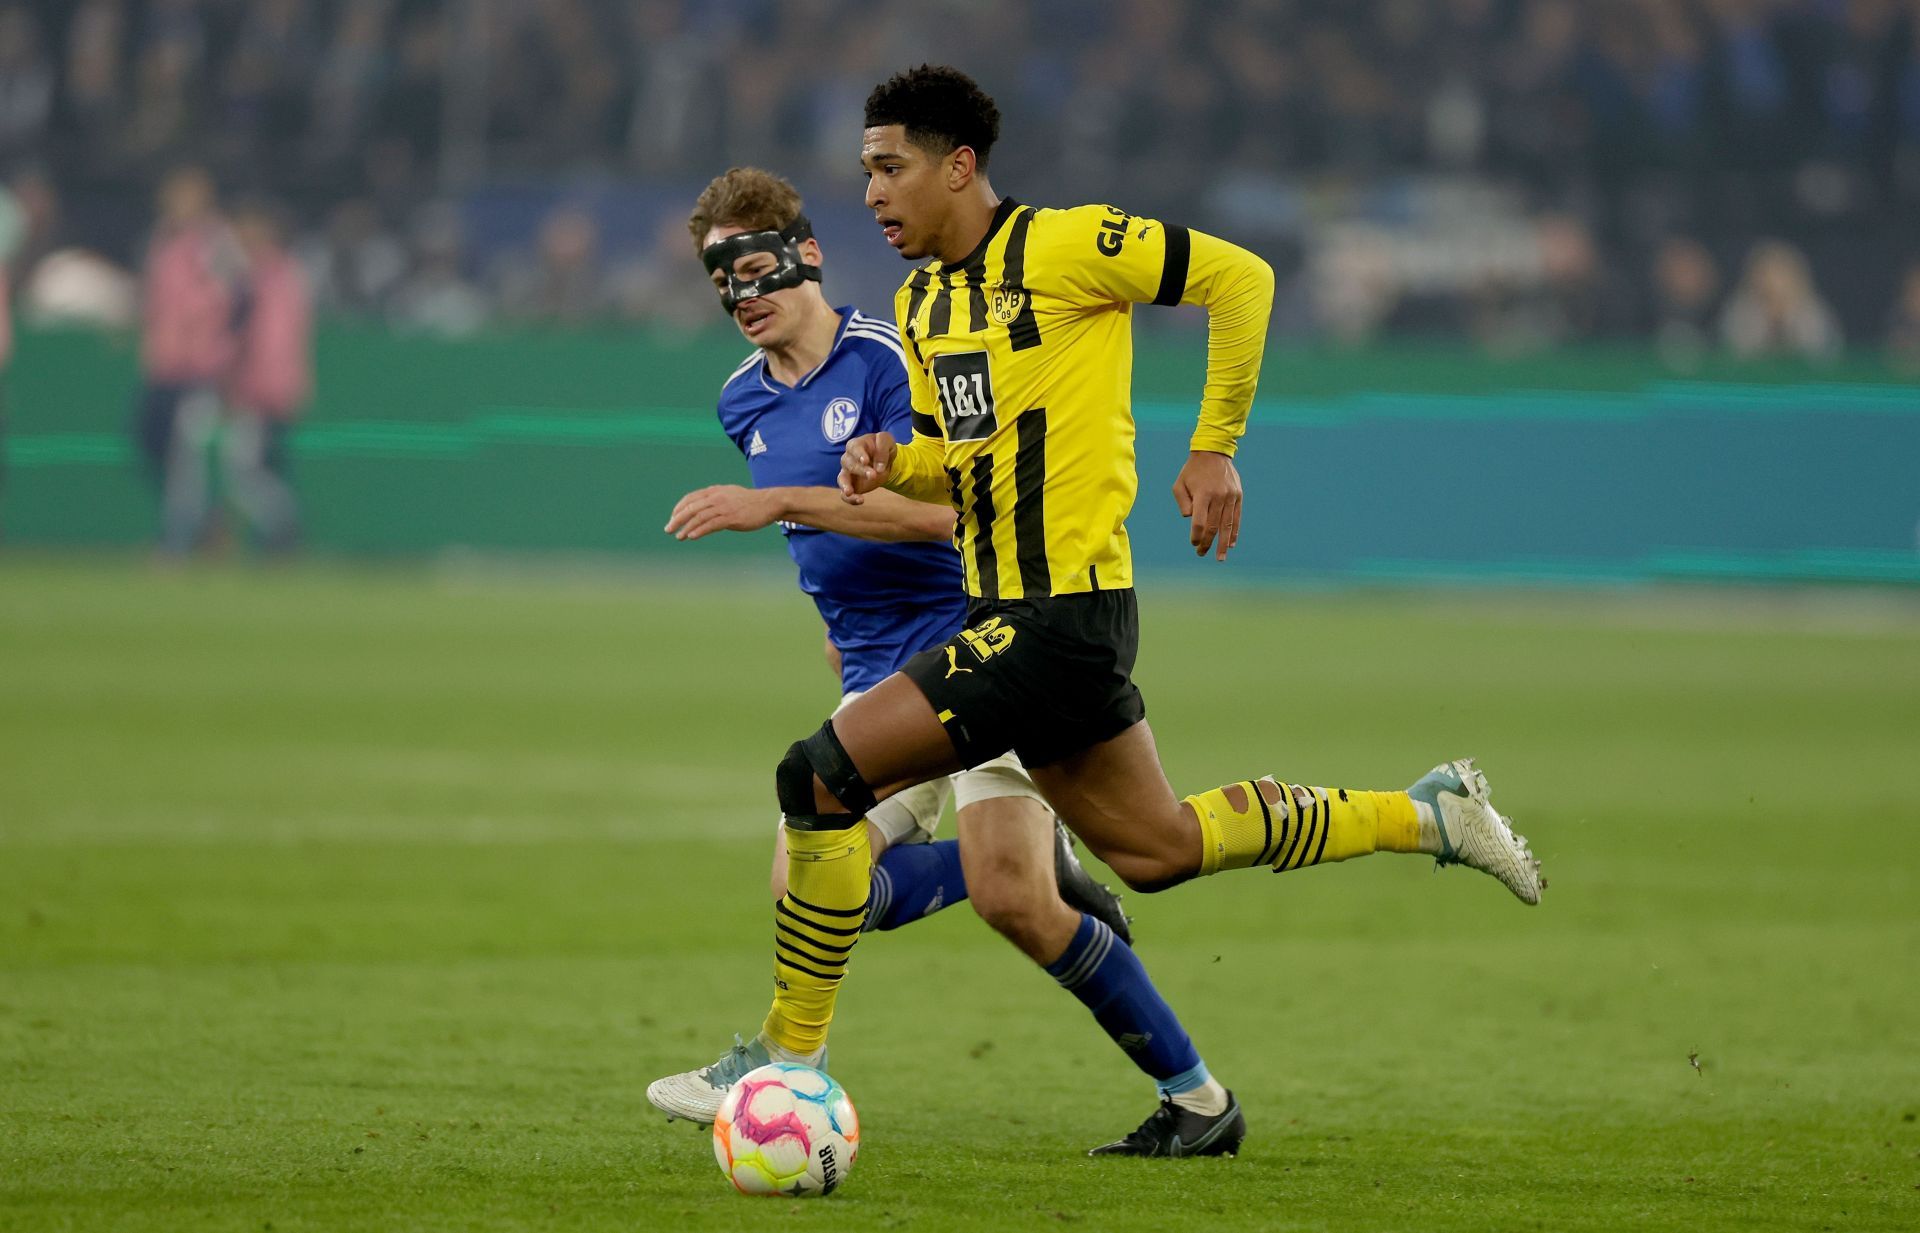 Liverpool target Jude Bellingham in action for Borussia Dortmund.